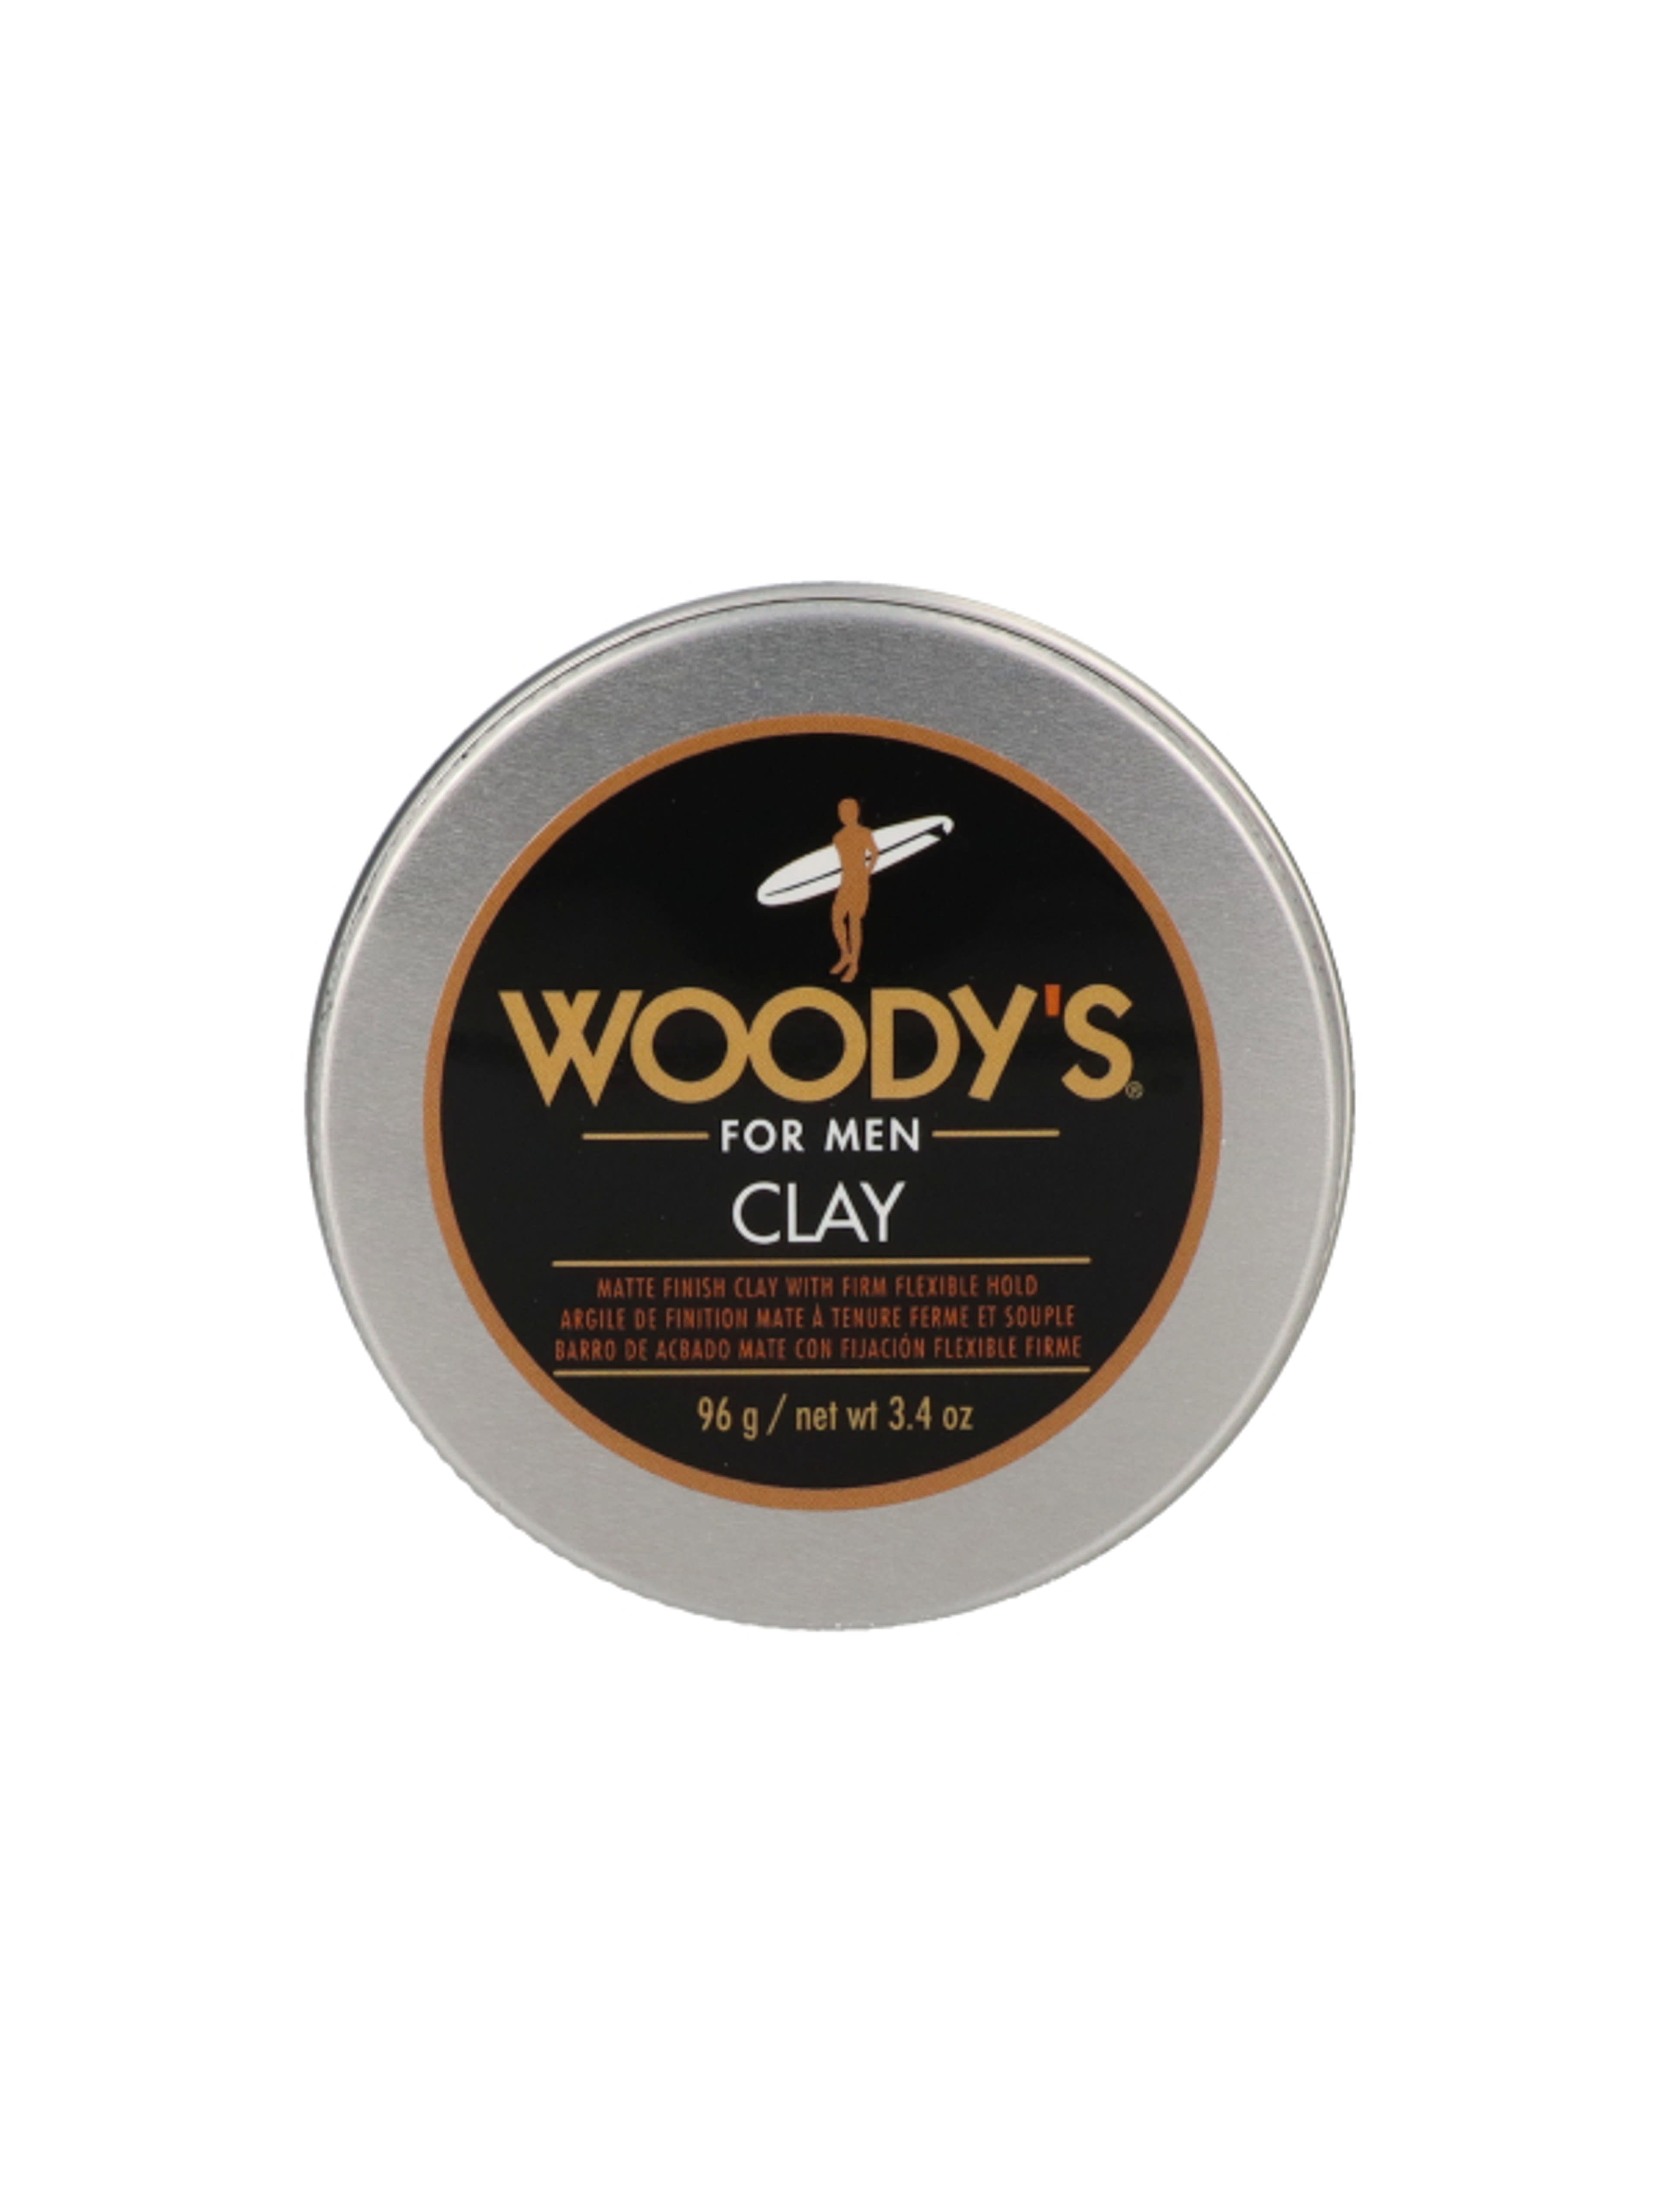 Woody's hajformázó clay - 96 g-1